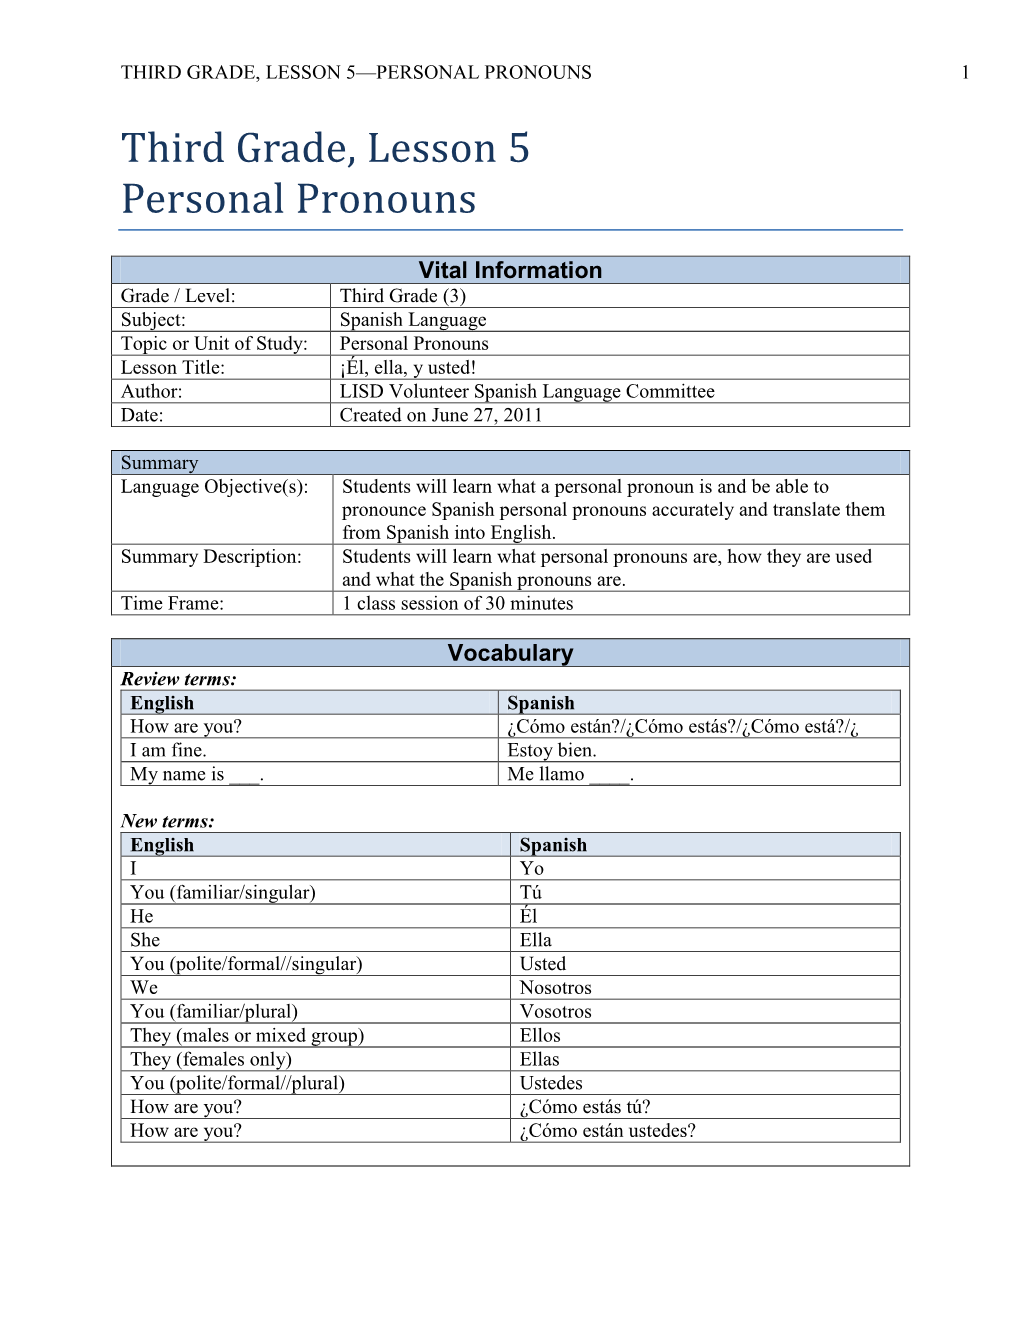 Third Grade, Lesson 5 Personal Pronouns